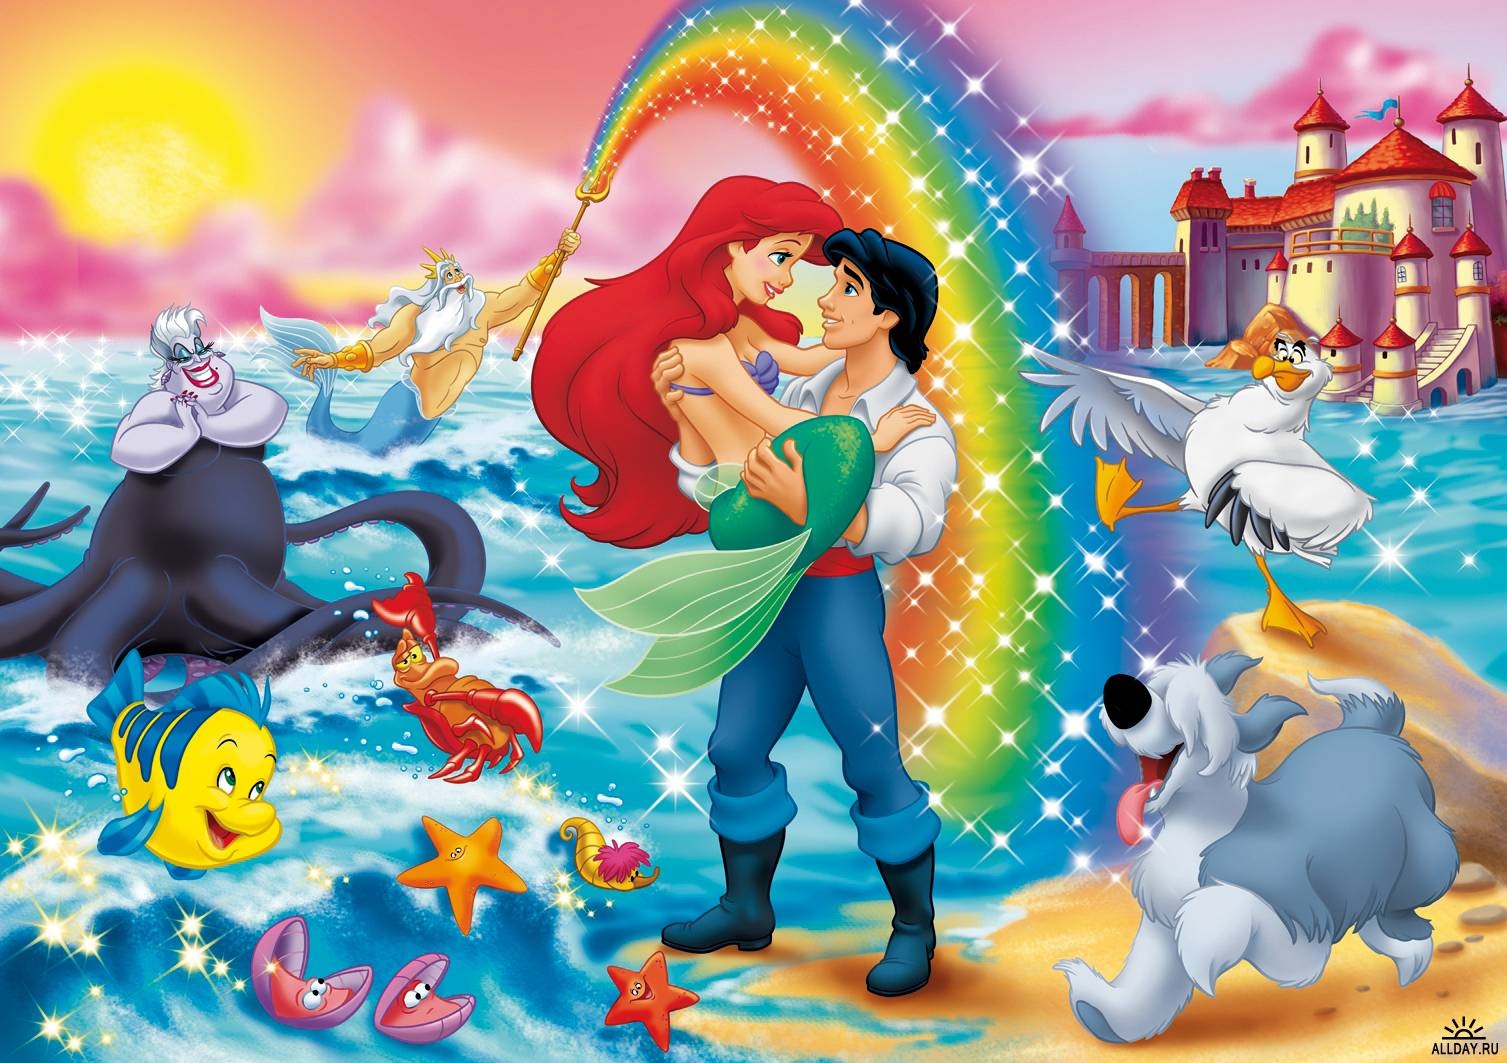 The Little Mermaid by Walt Disney Company